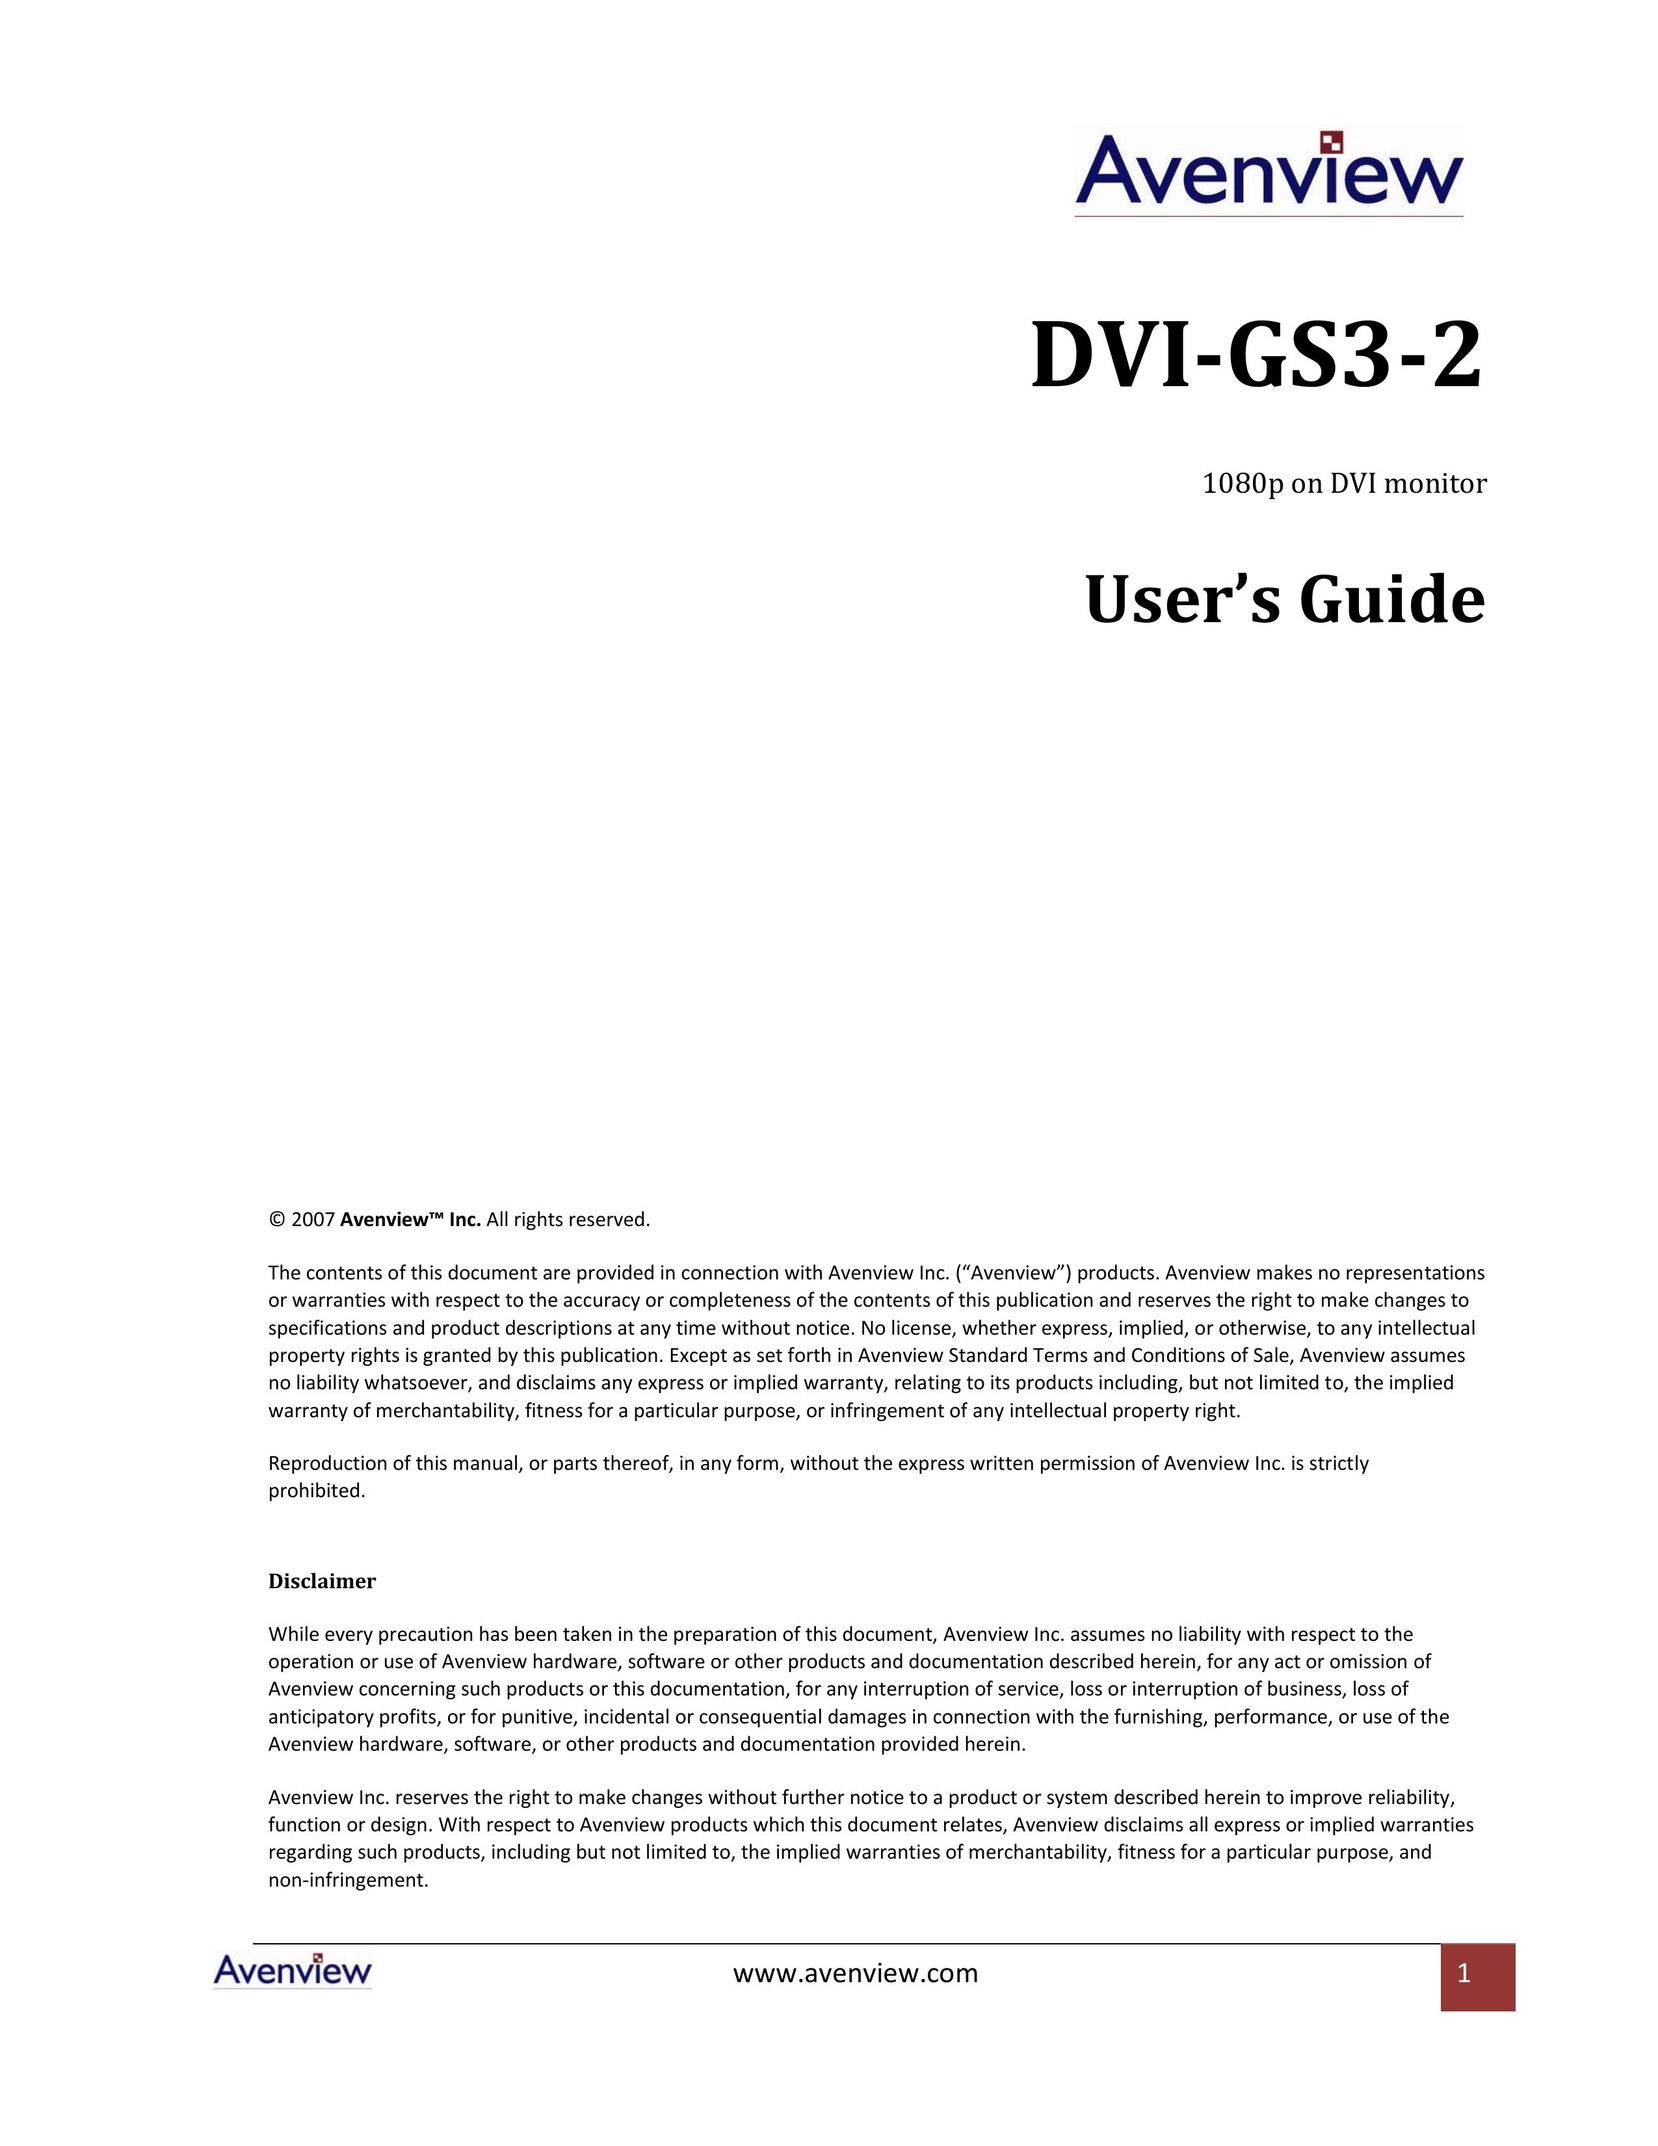 Avenview DVI-GS3-2 Computer Monitor User Manual